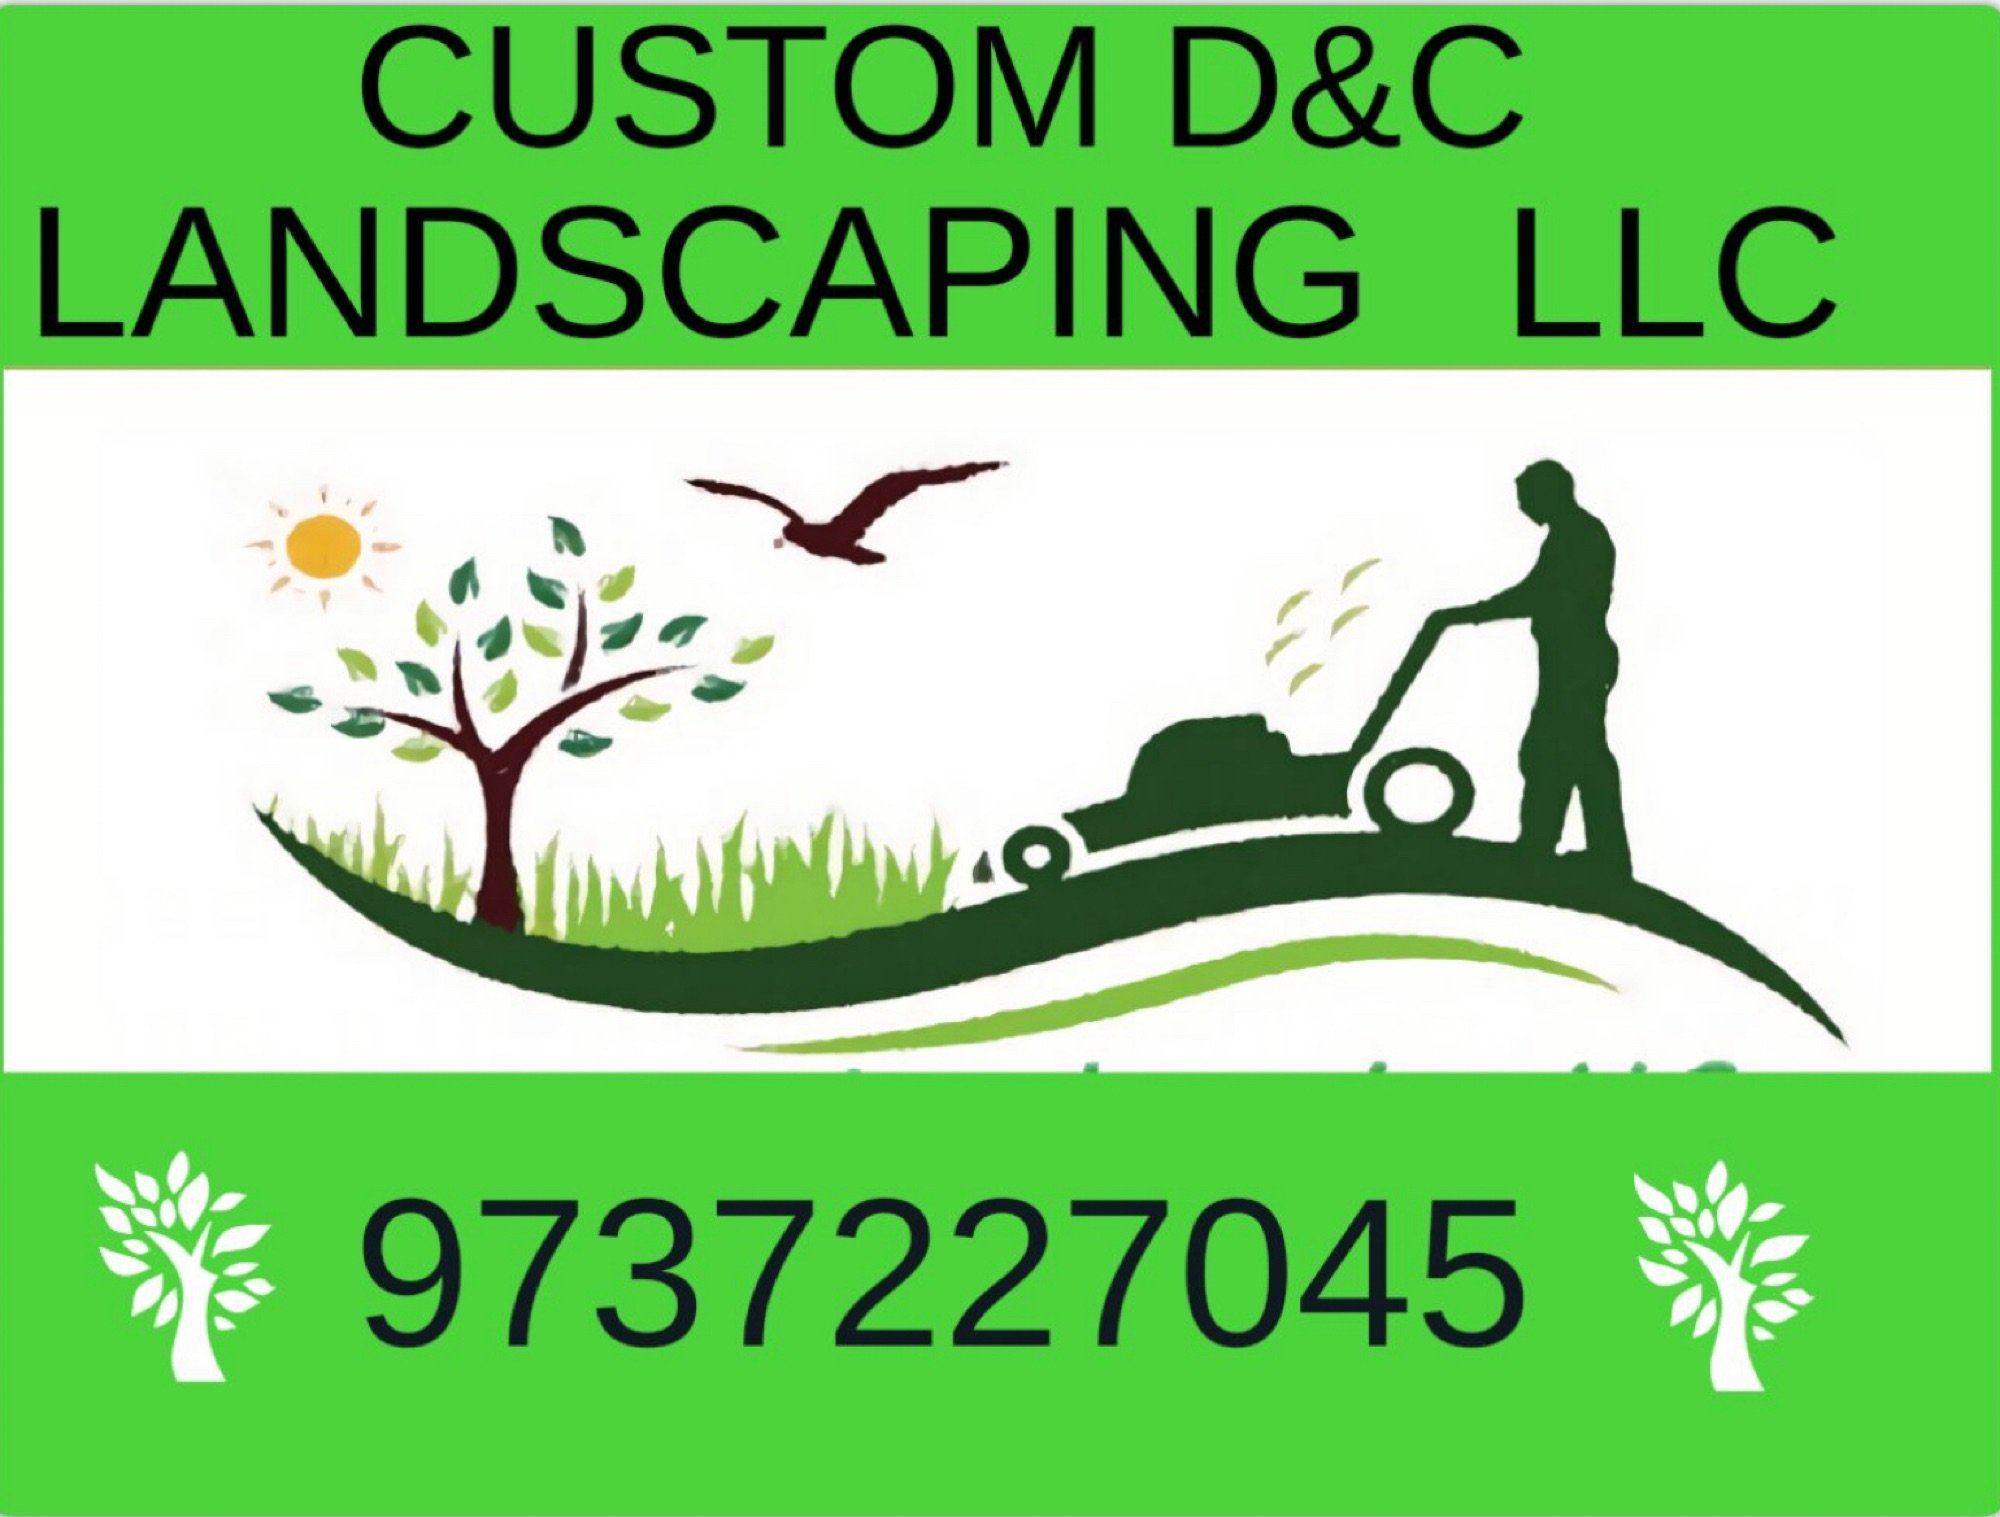 CUSTOM D&C LANDSCAPING LLC Logo